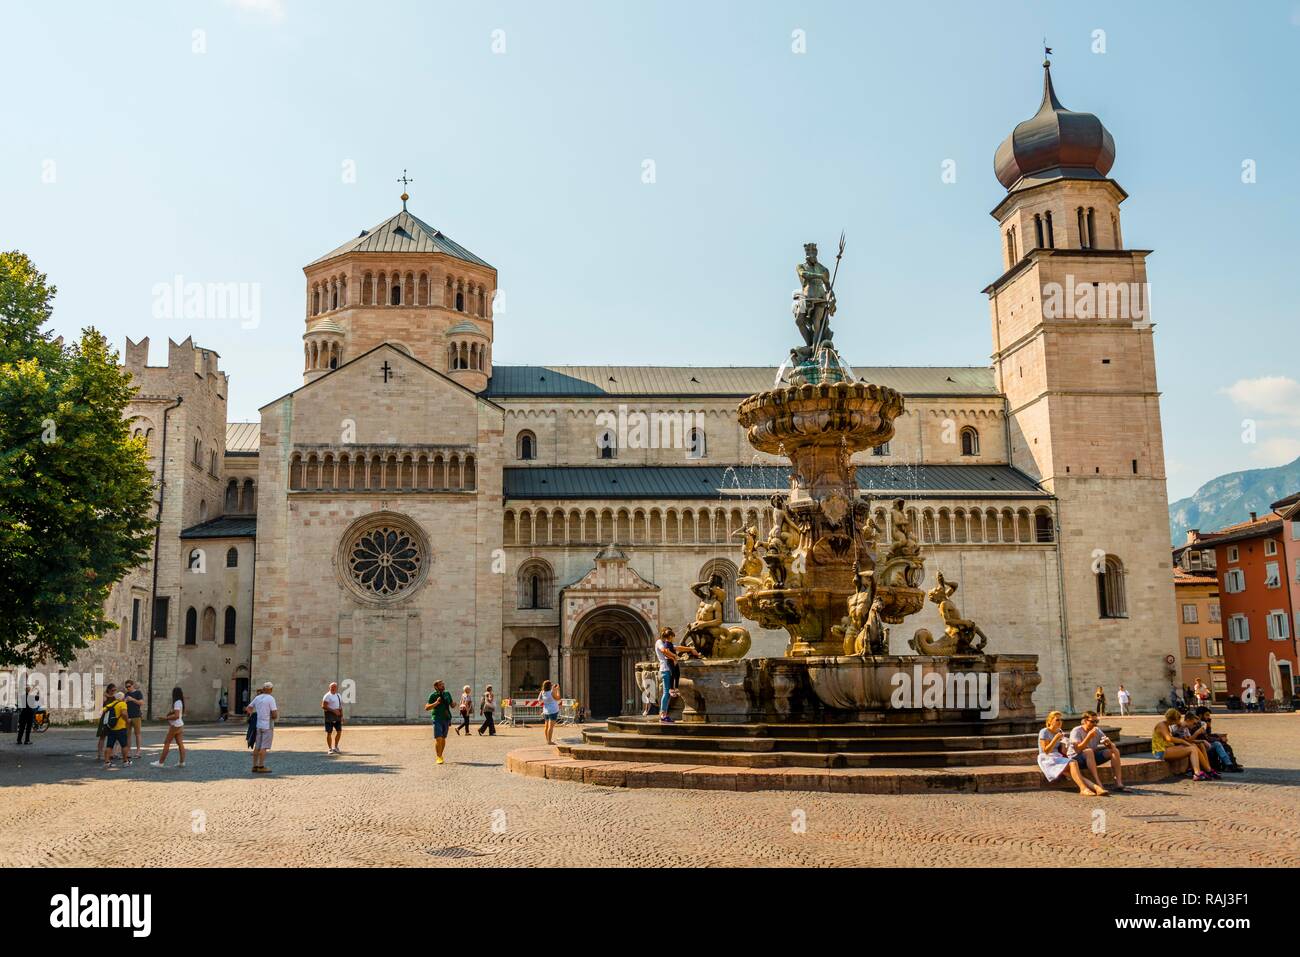 La Plaza de la catedral, la Piazza del Duomo, con la fuente de Neptuno, la Fontana del Nettuno, el Palazzo Pretorio, la Catedral de Trento. Foto de stock